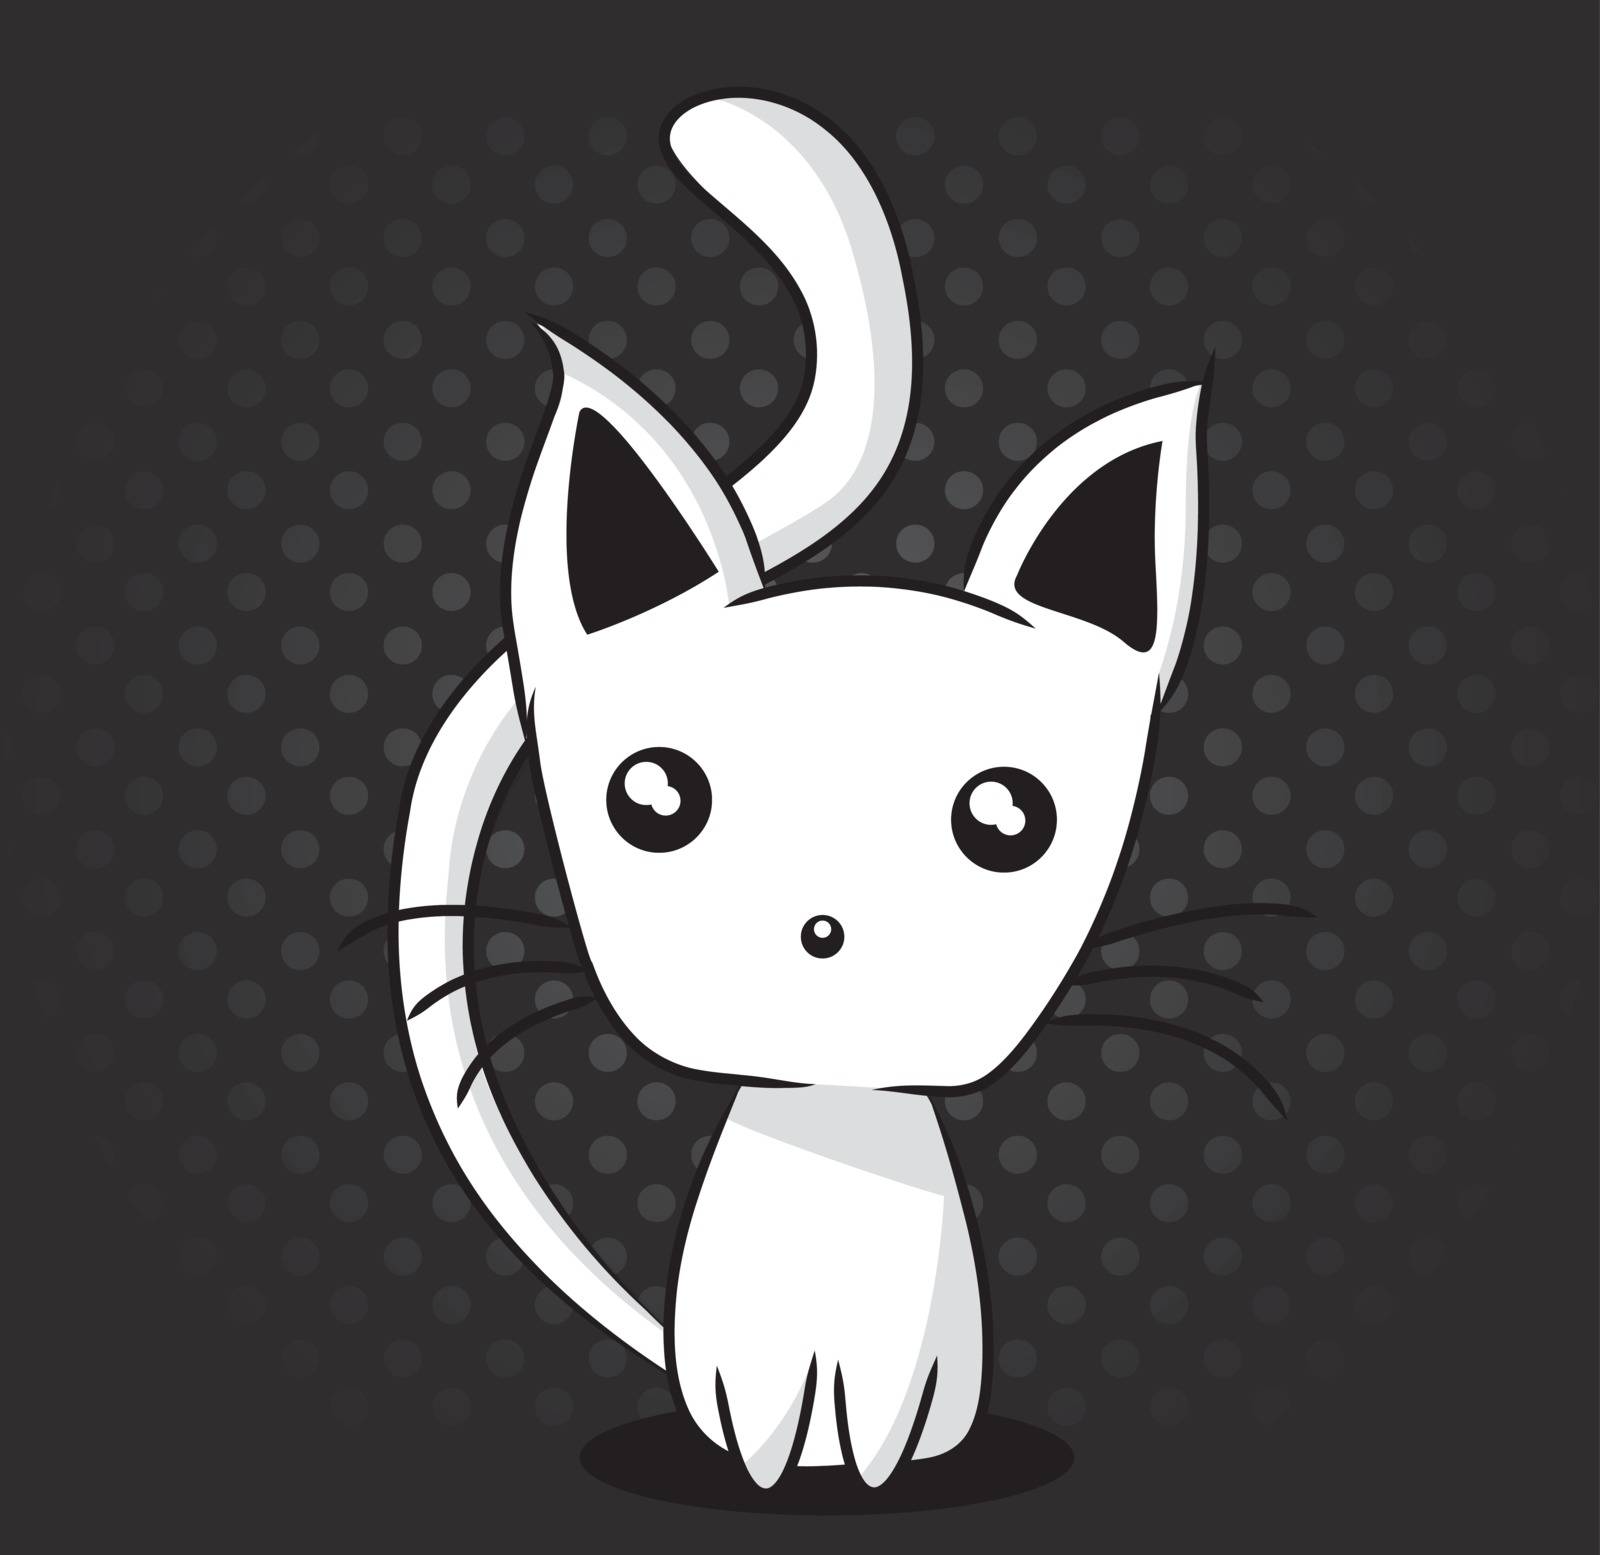 Adorable kitten on dotted background, vector illustration